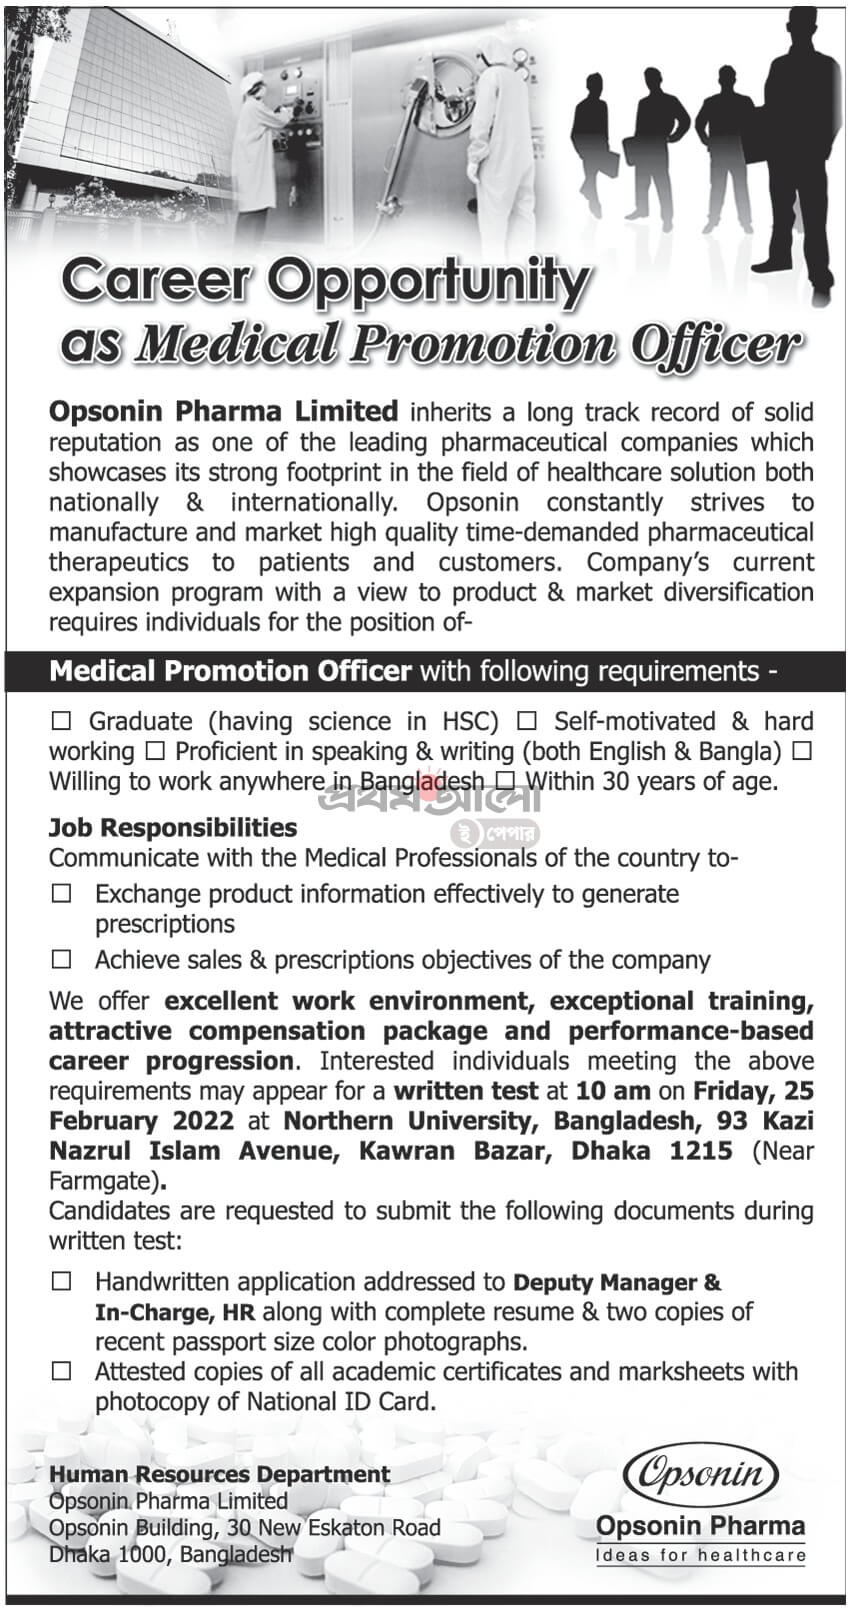 Opsonin Pharma Limited Job Circular image 2022